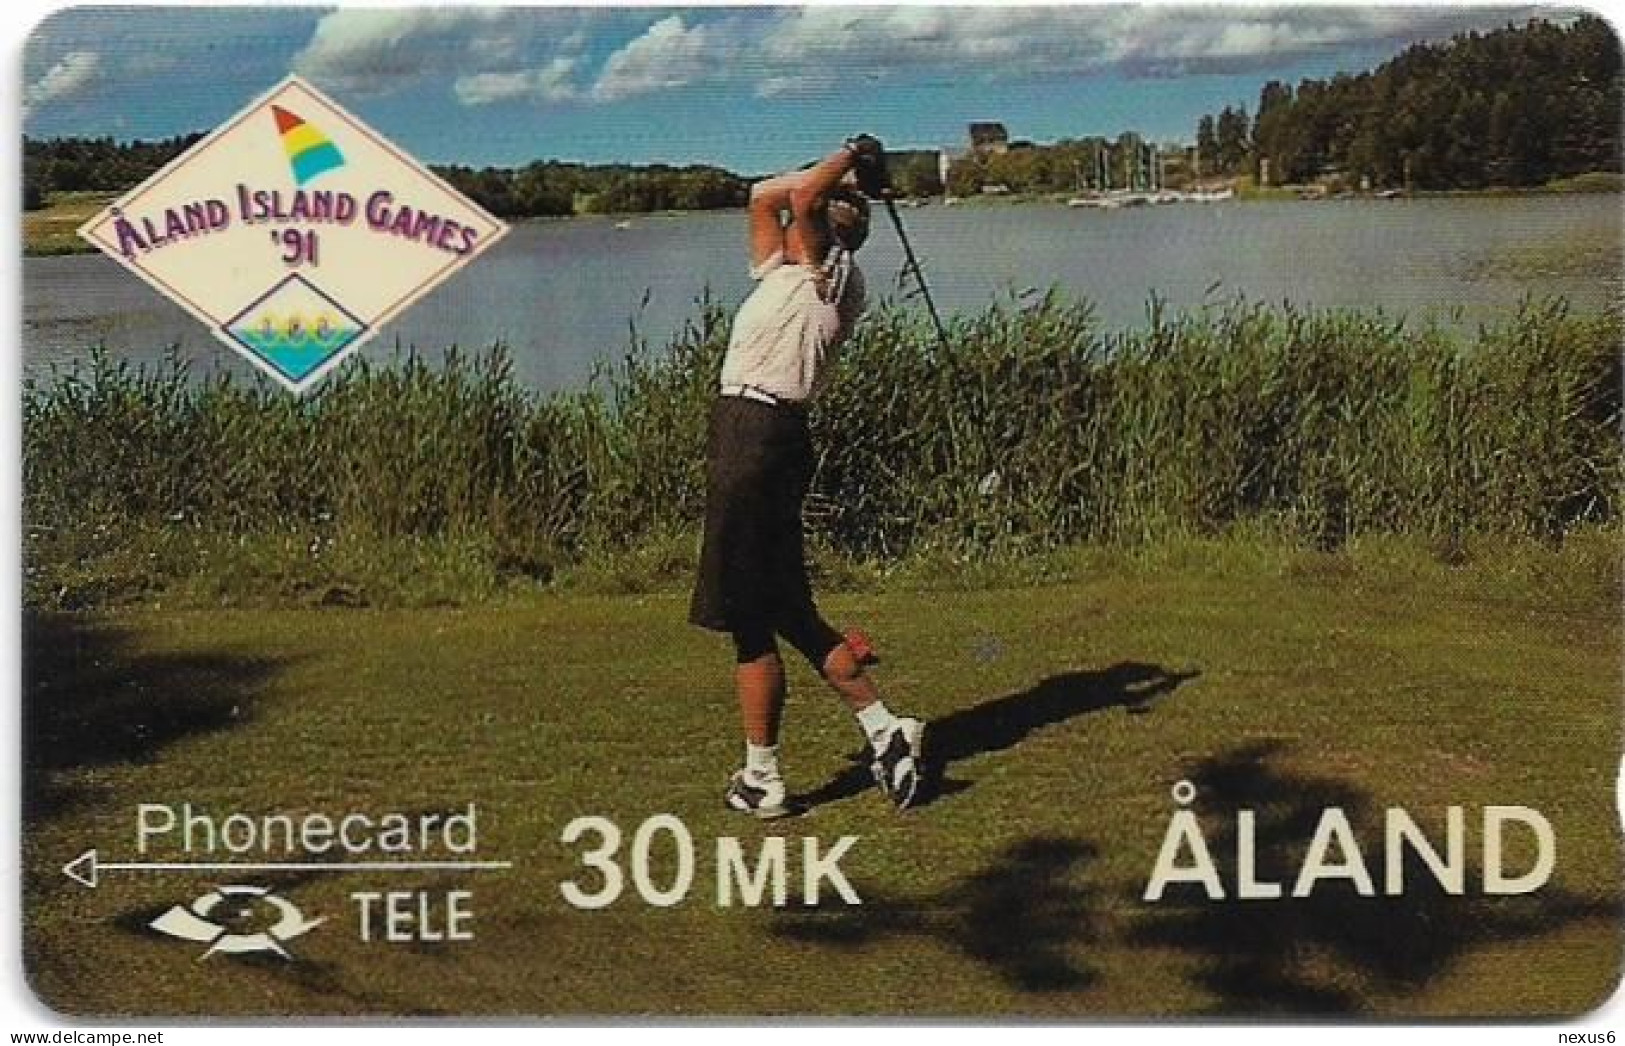 Aland - Aland Games Golf - 4FINA (1 Box At Left), 06.1991, 5.000ex, Mint No Blister - Aland